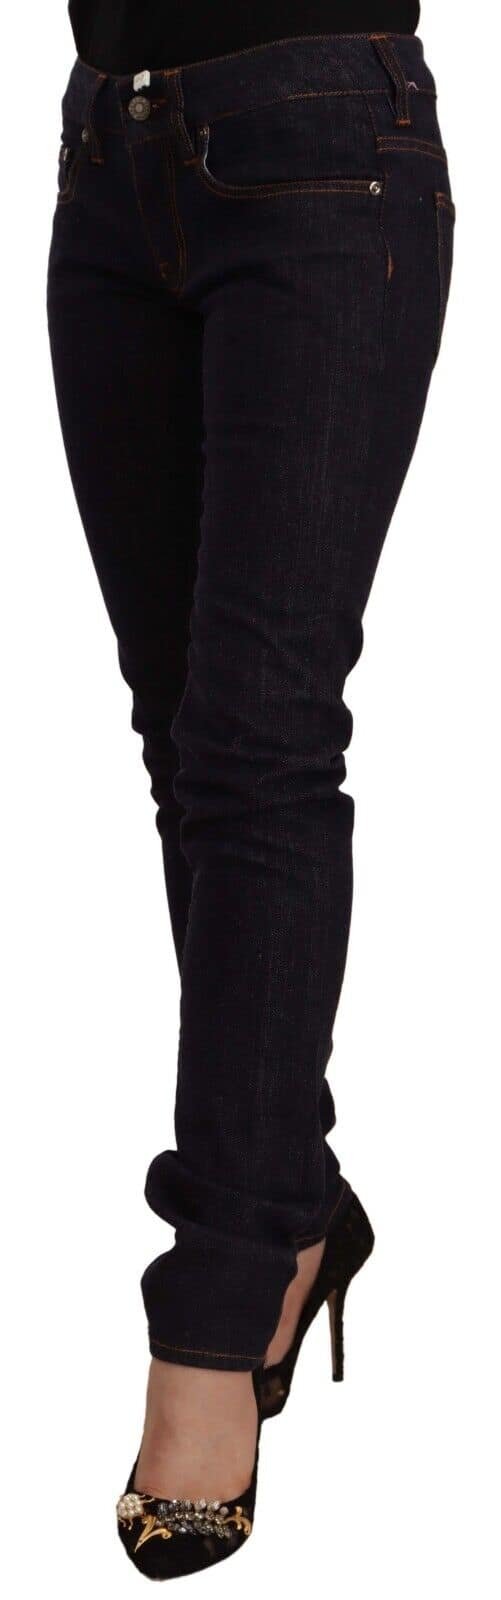 Black mid waist cotton denim skinny jeans